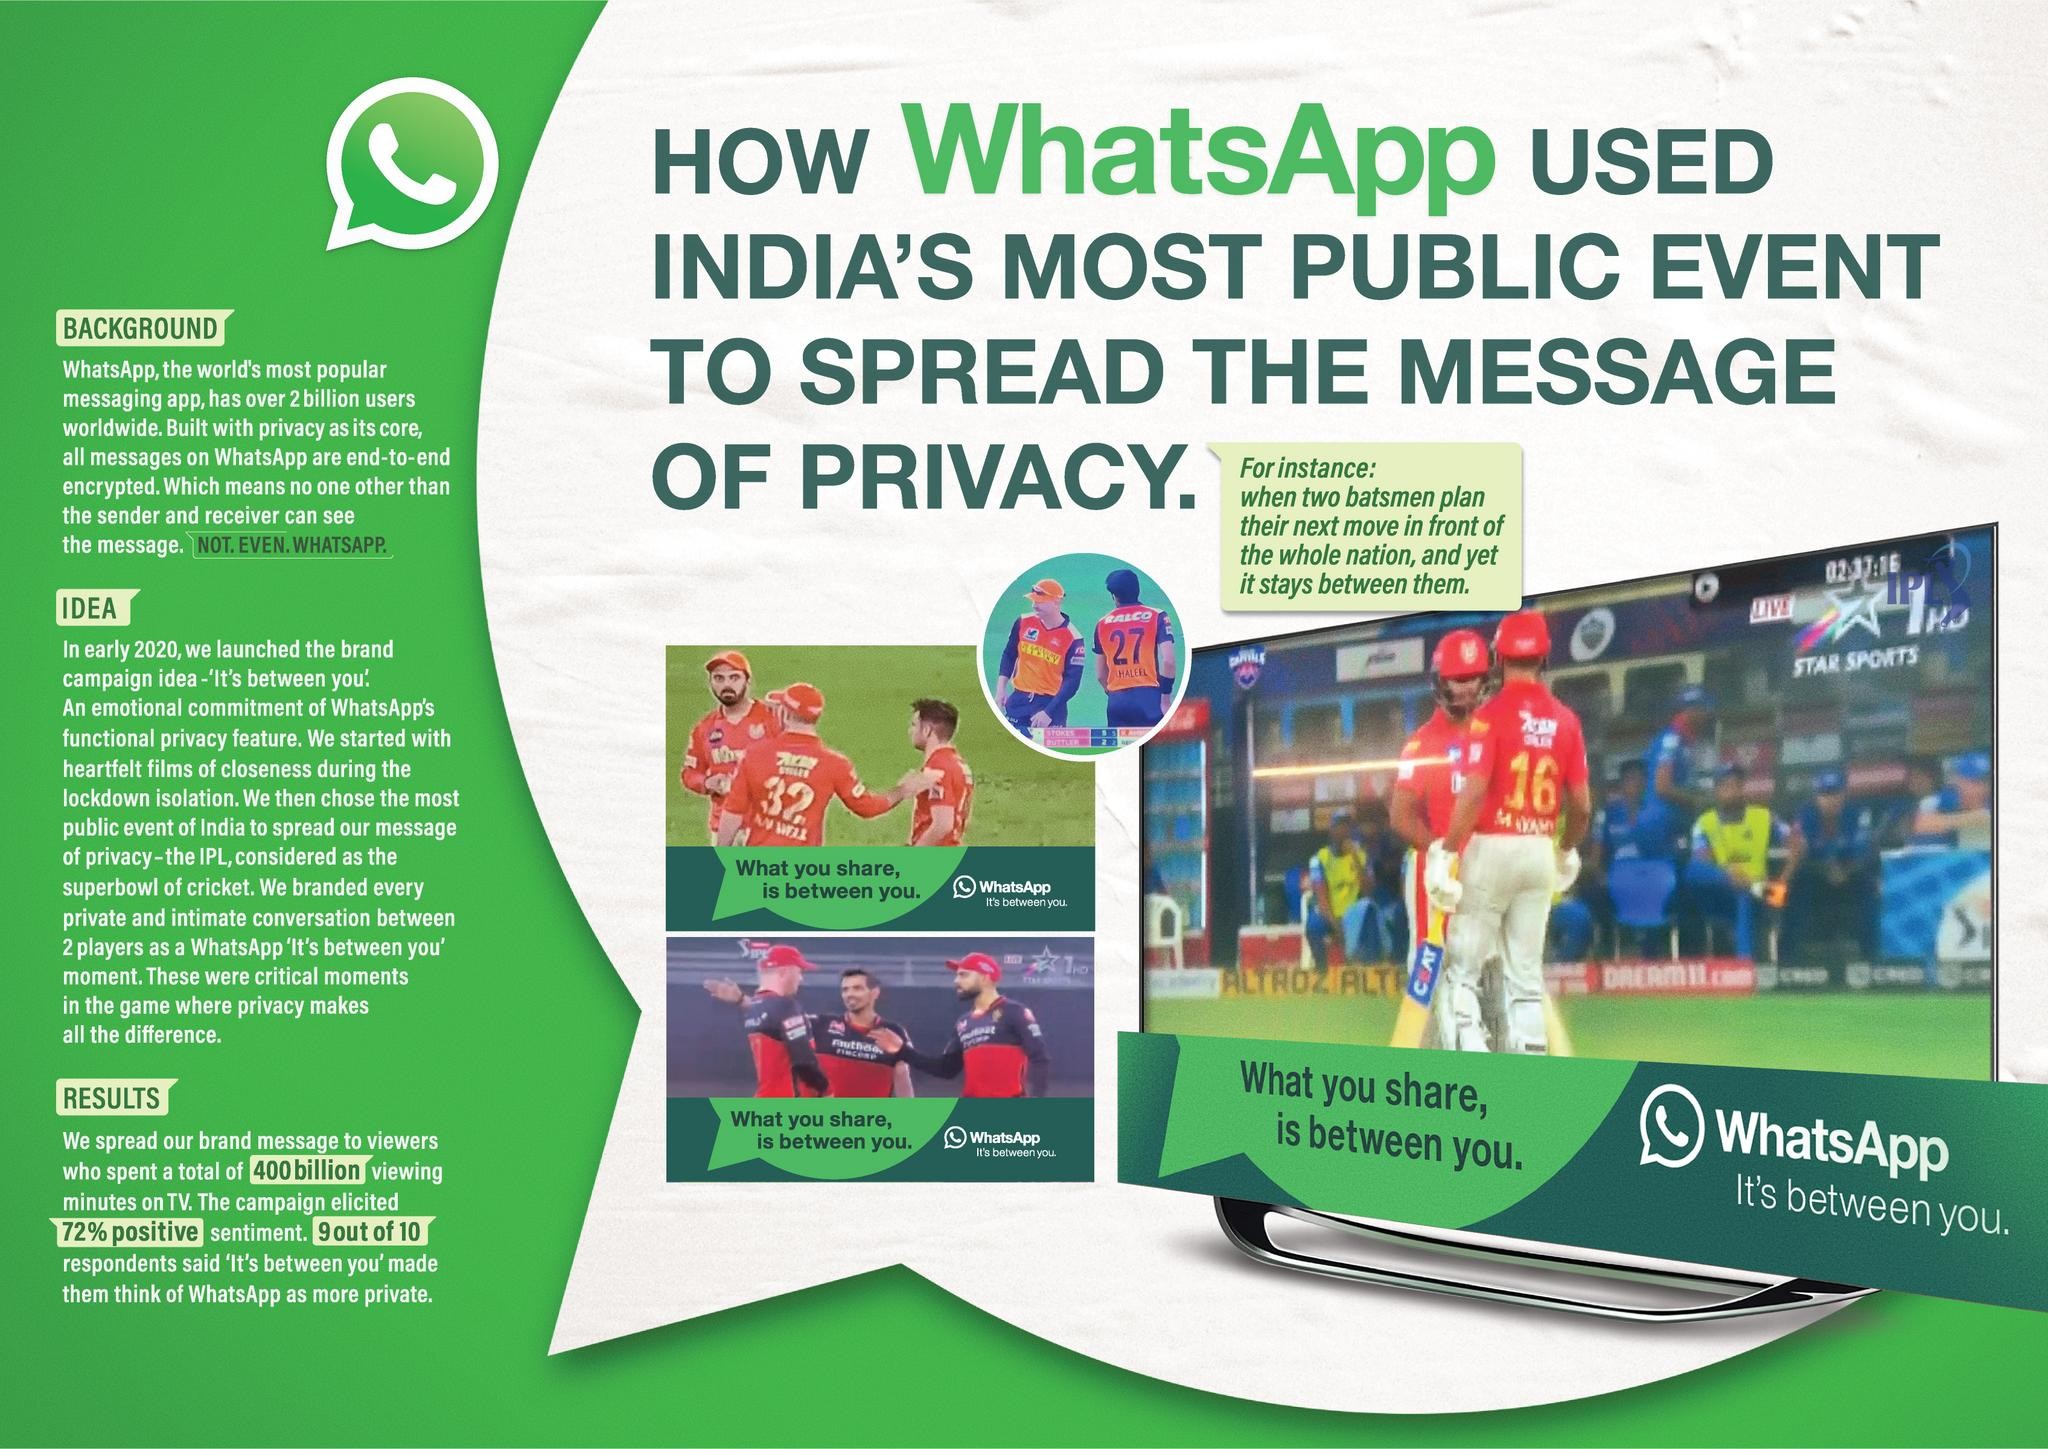 WhatsApp IPL integration